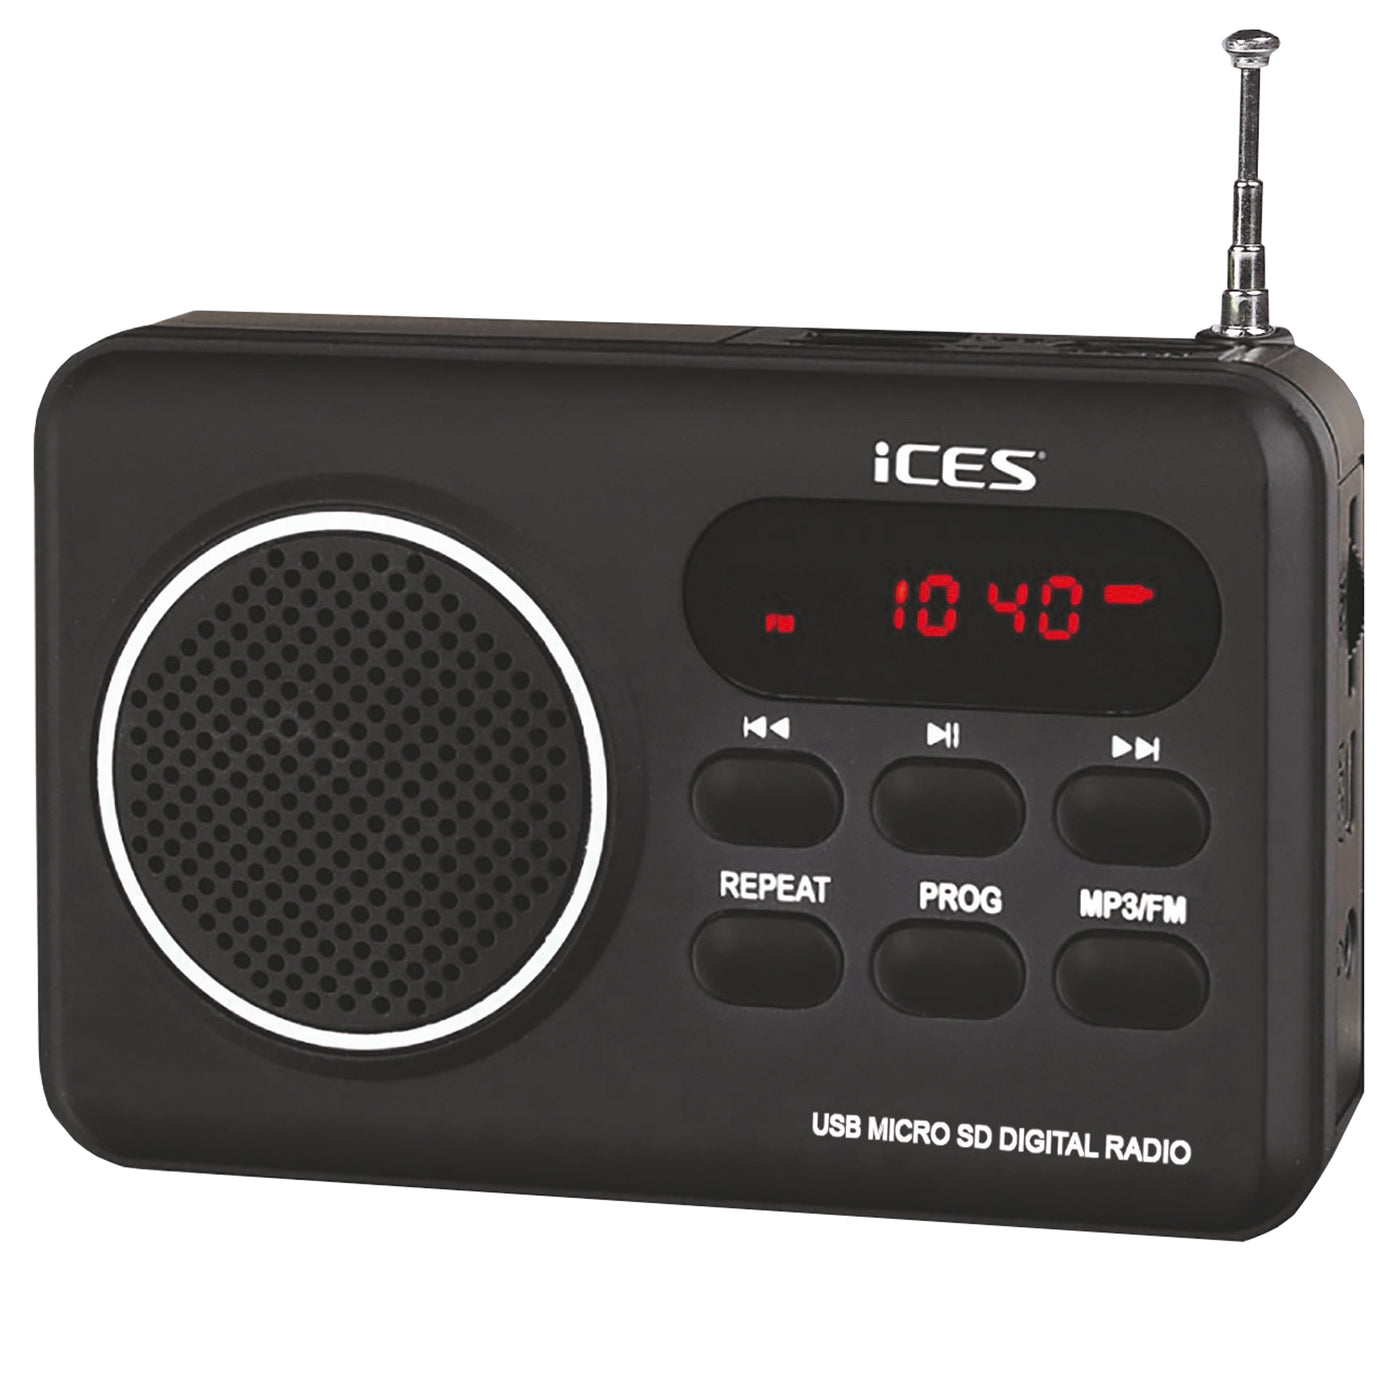 Ices IMPR-112 Black - Portable radio PLL FM, USB, SD